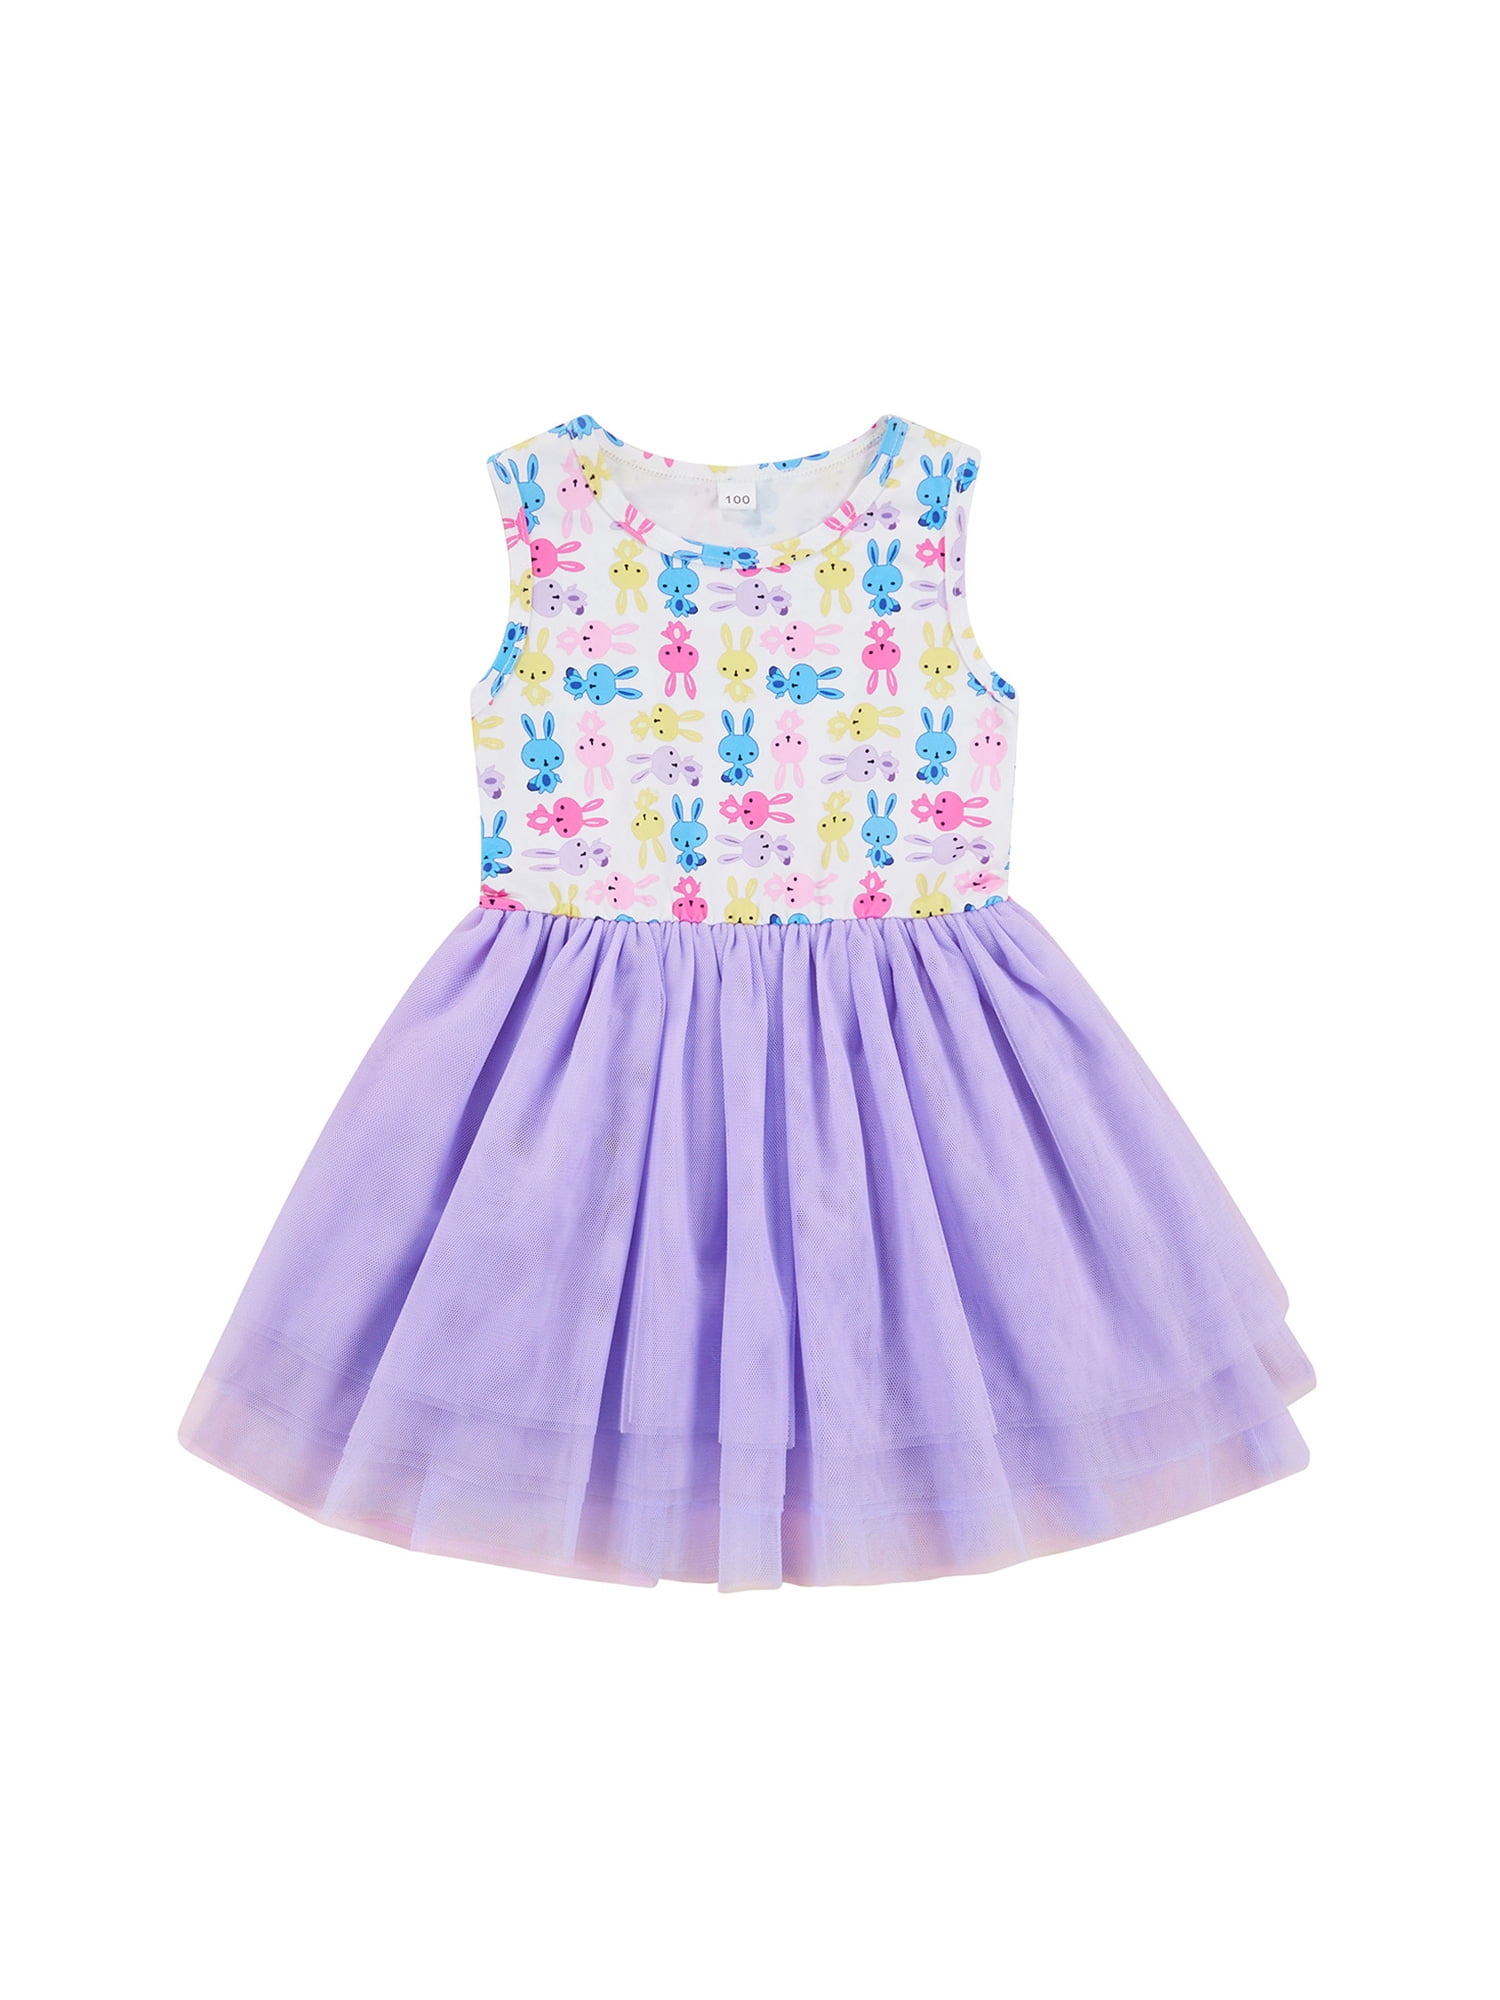 Girls Easter Dresses - Walmart.com ...